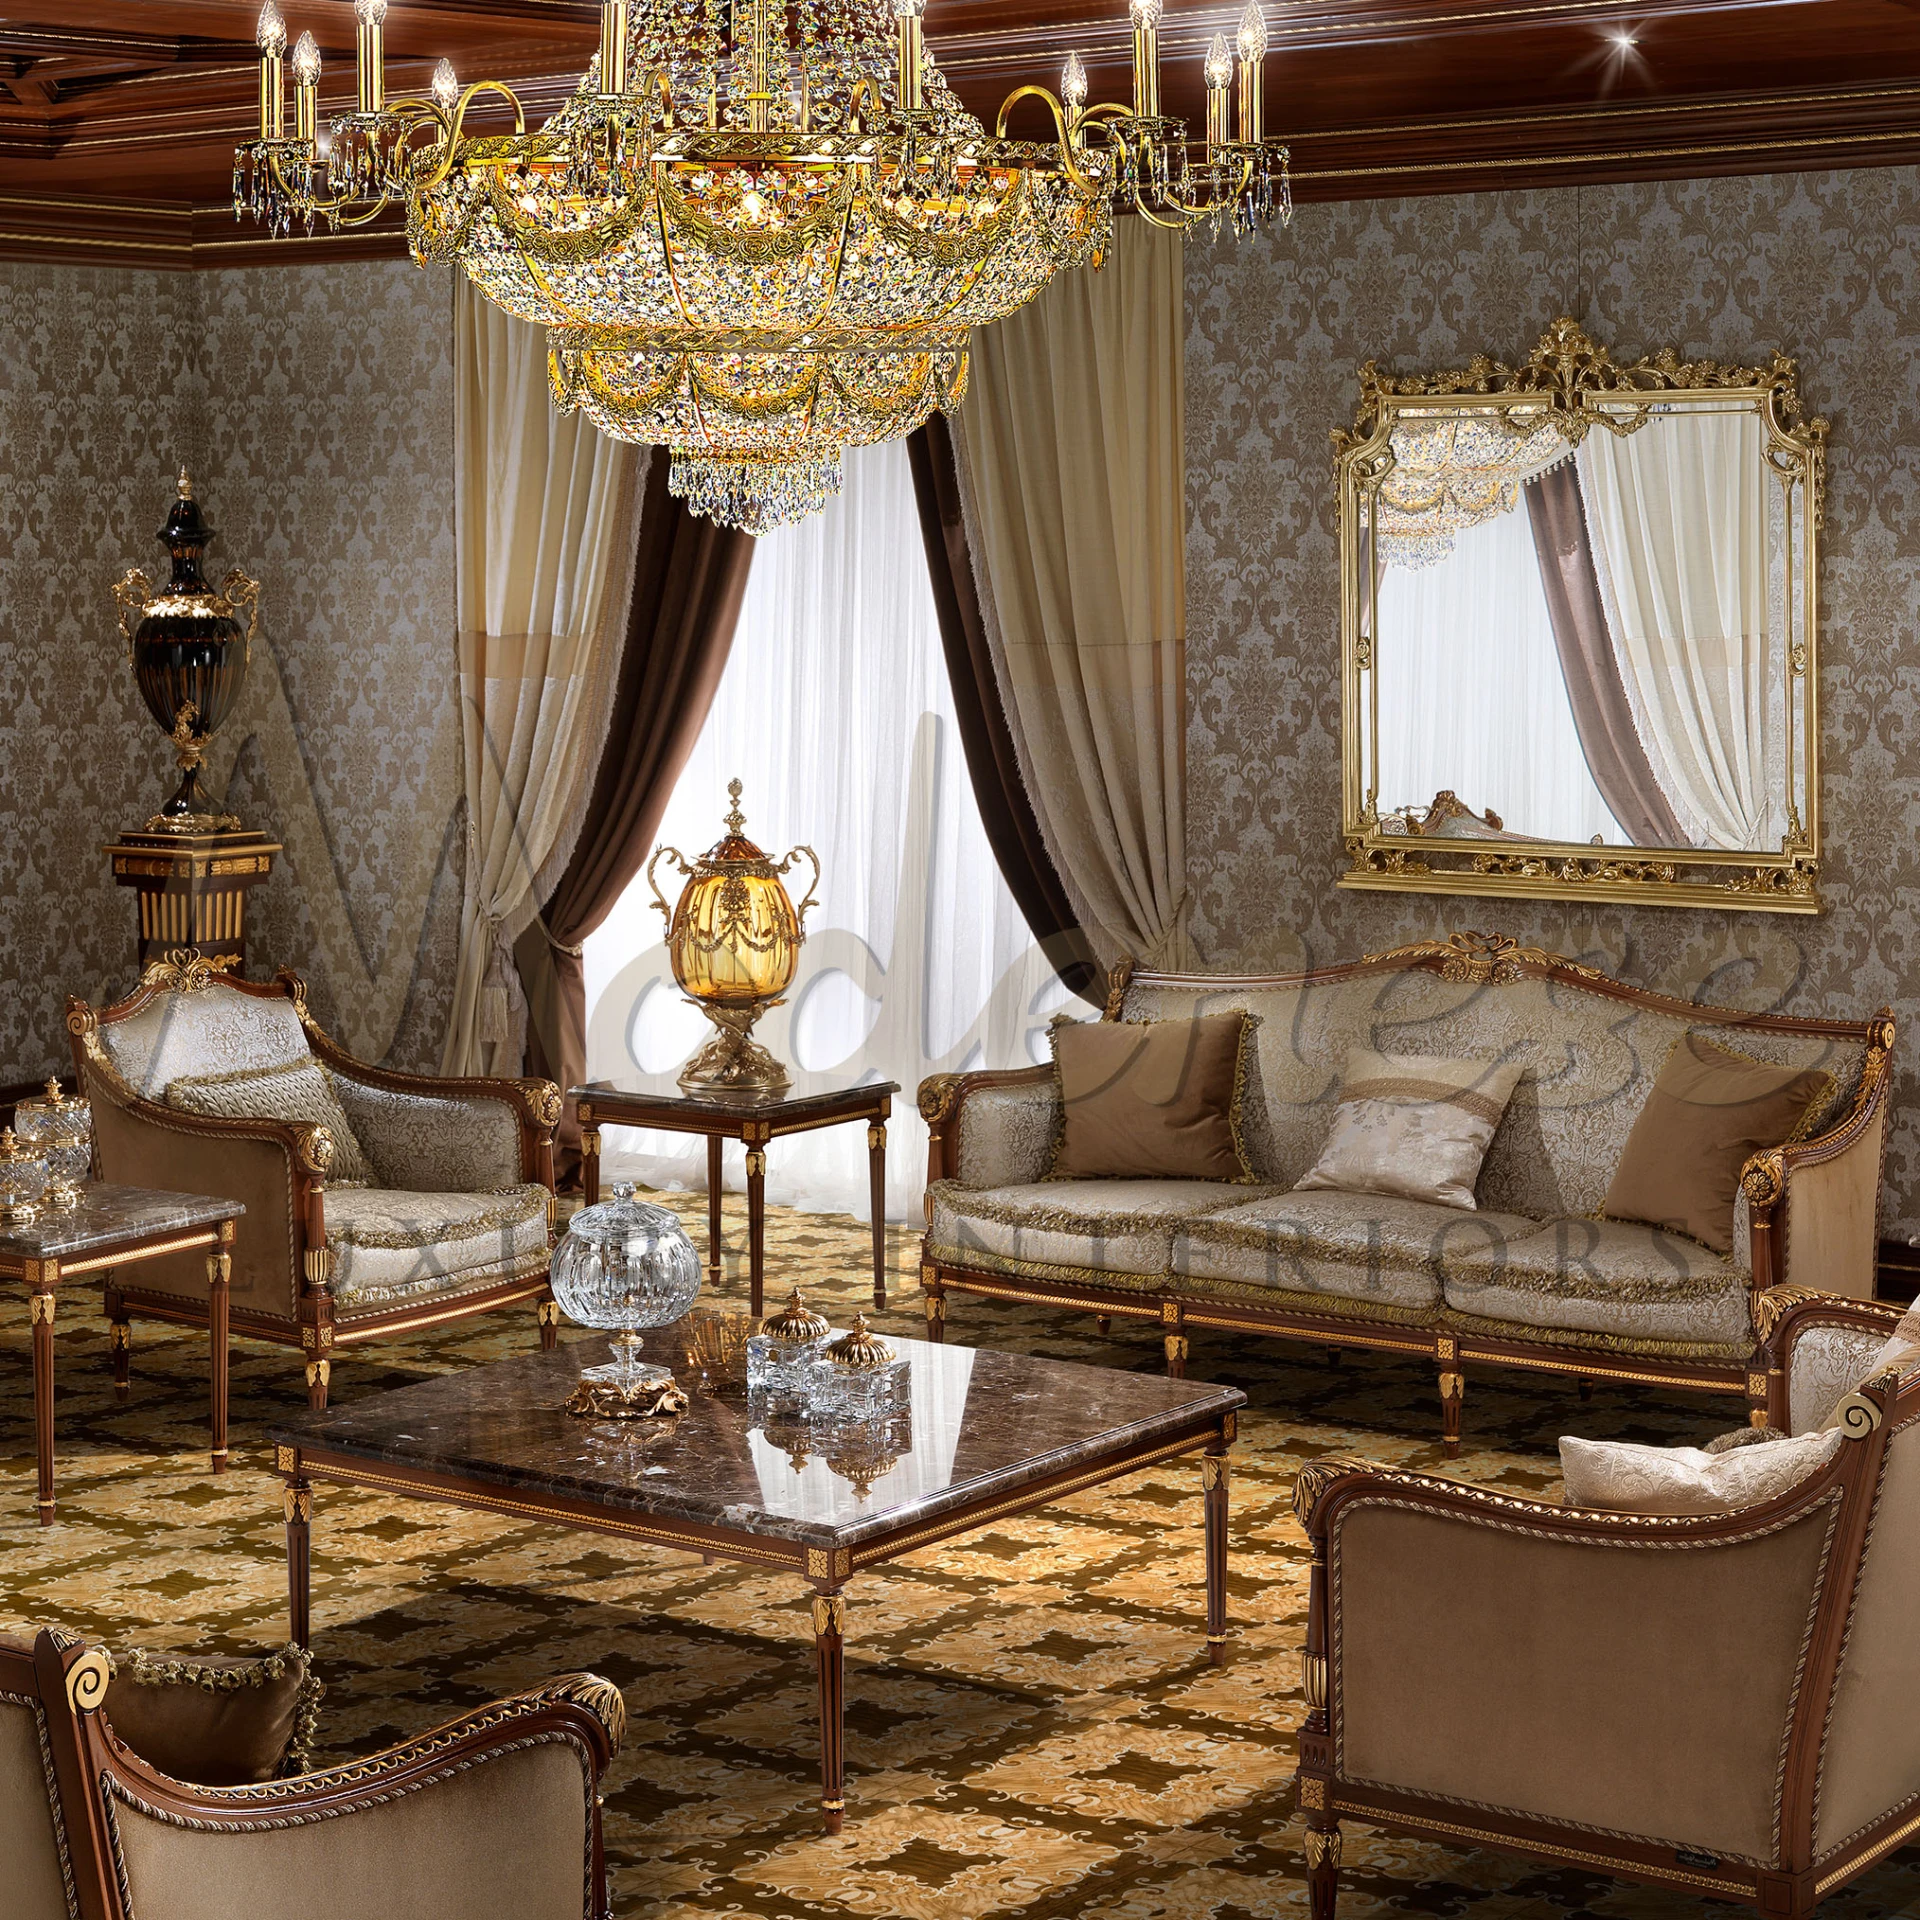 Regal Handcarved Sofa: Exquisite Craftsmanship for Refined Interiors